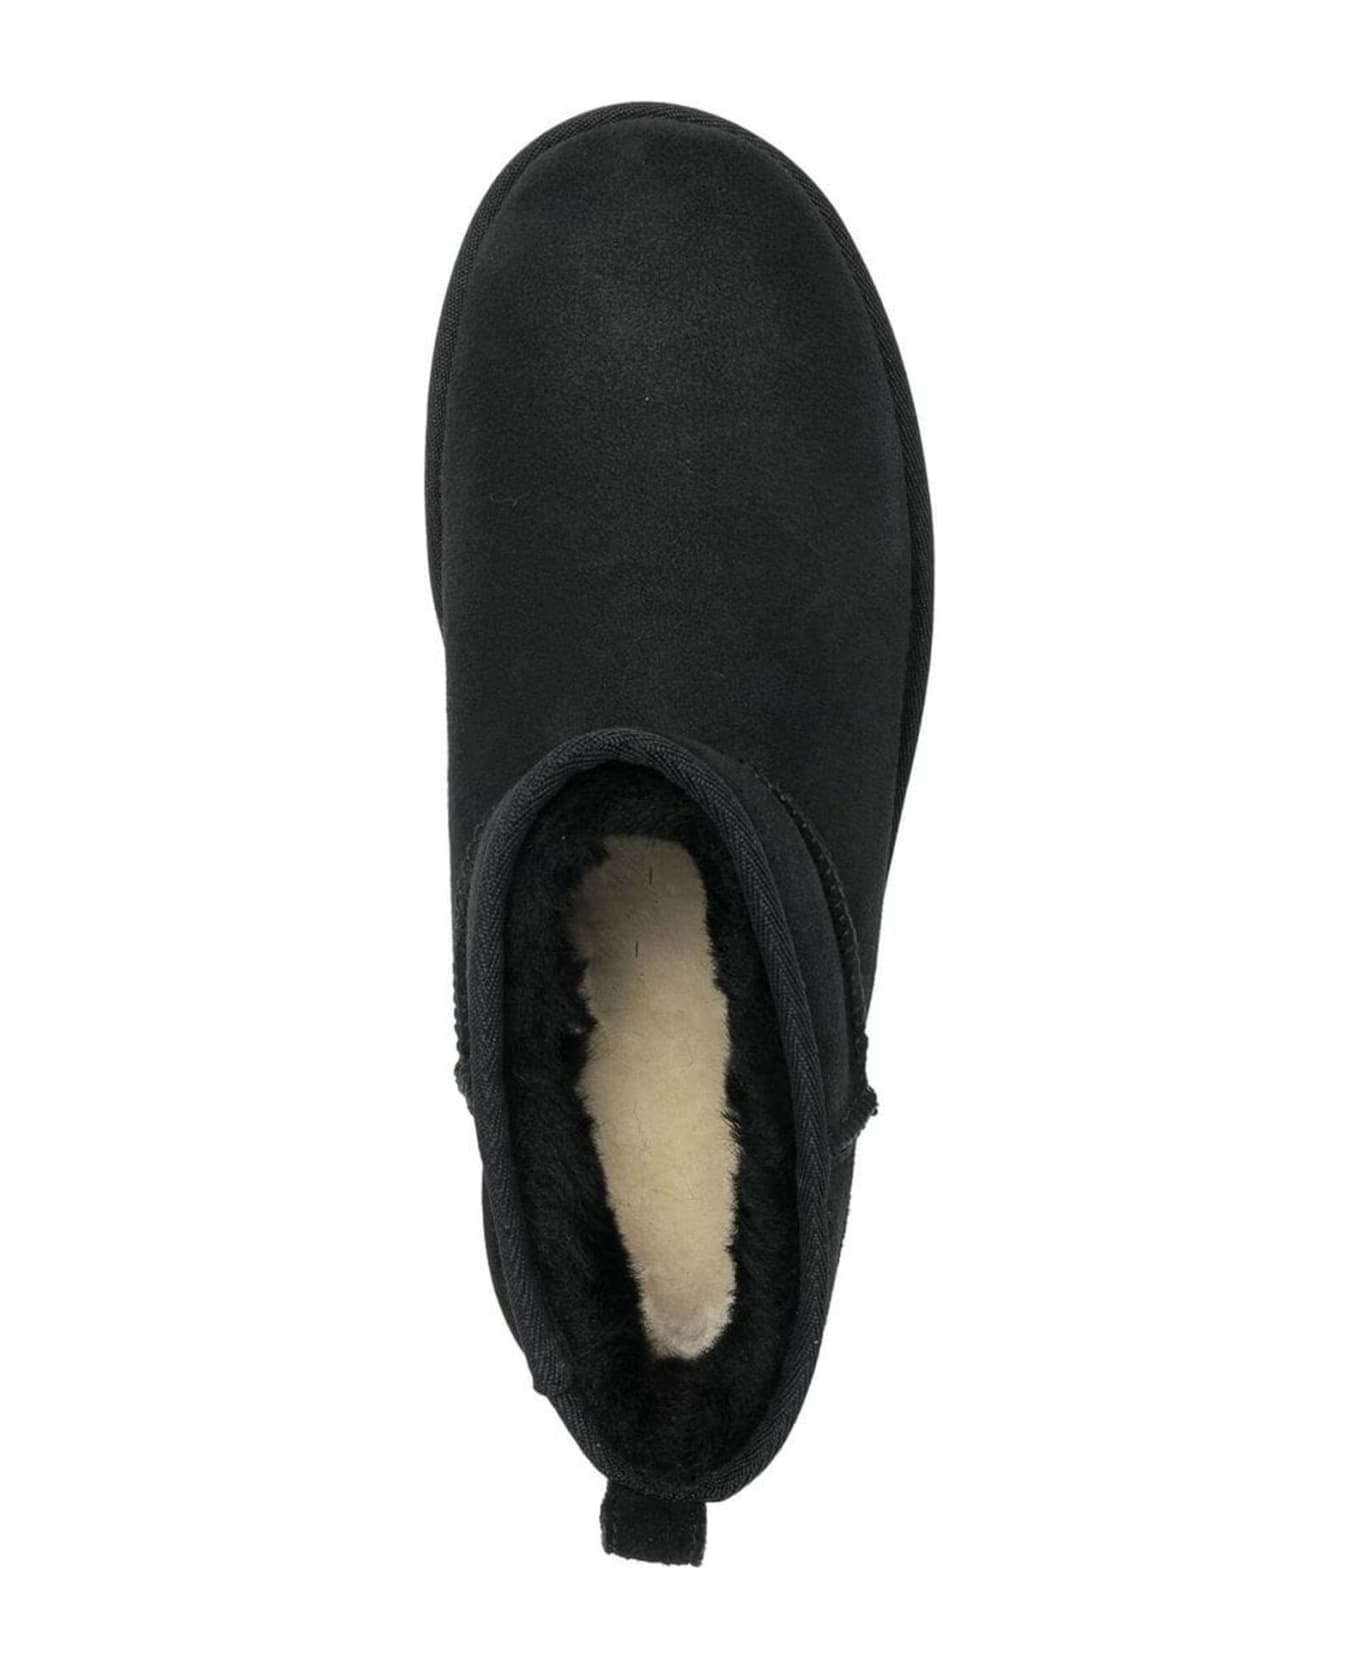 UGG Black Ultra Mini Suede Boots - Black